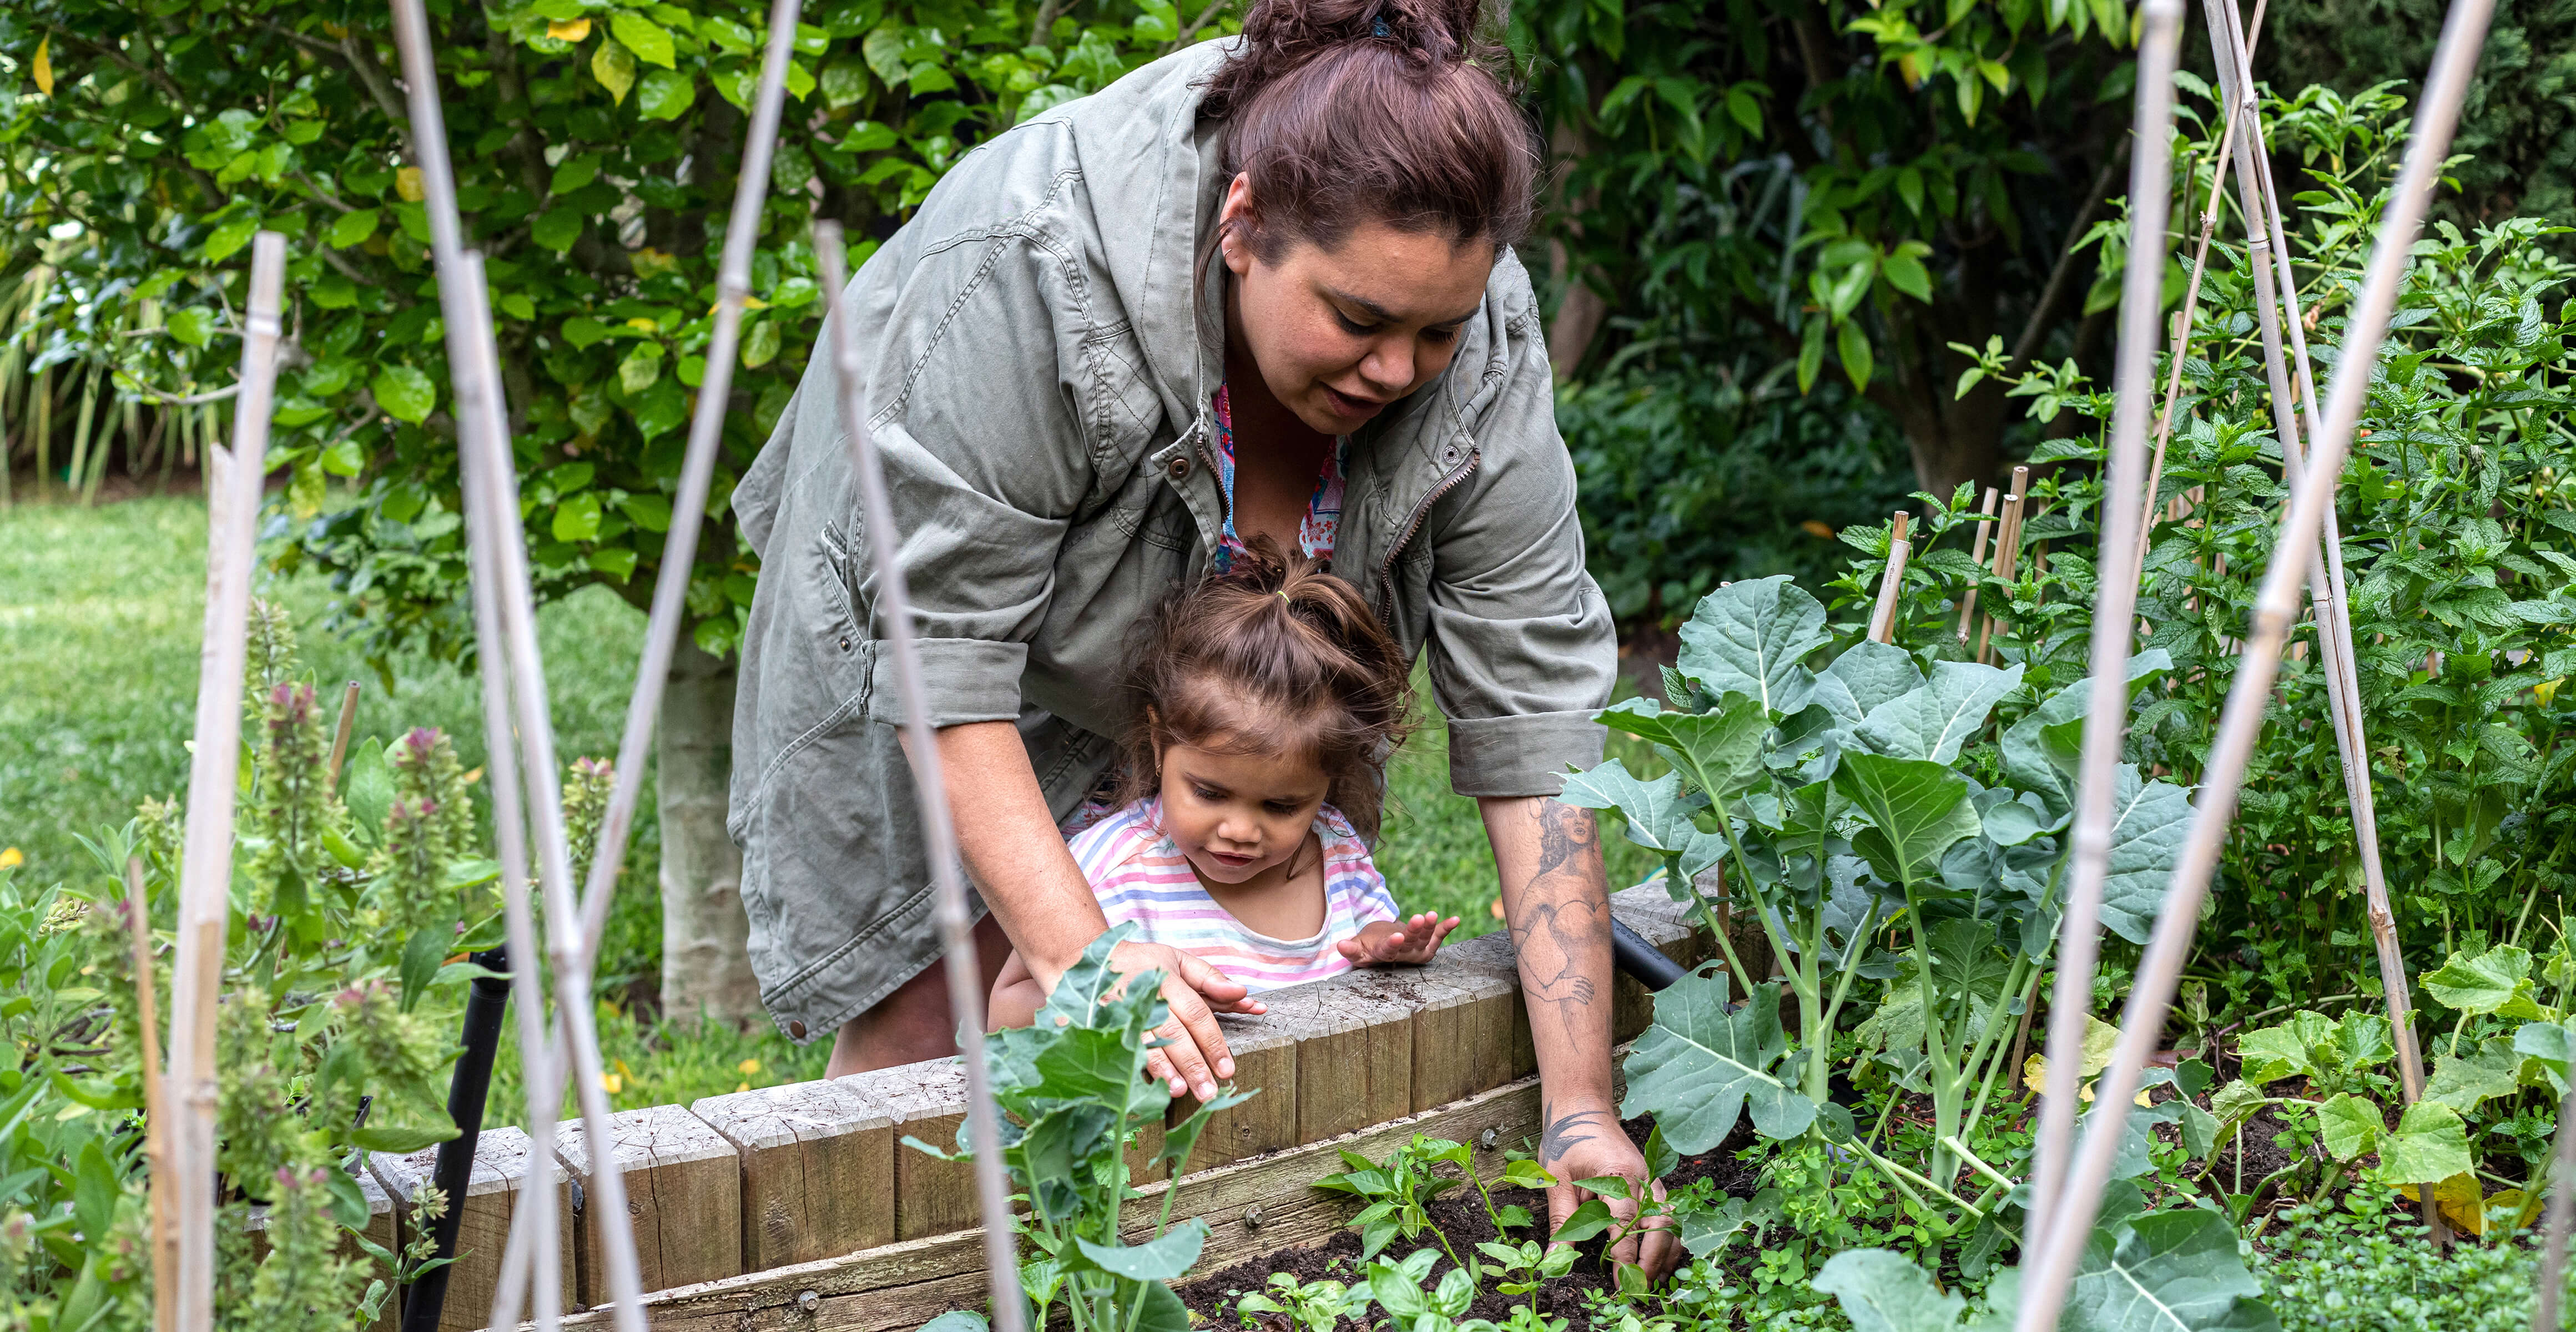 Indigenous women helping her young daughter in the garden